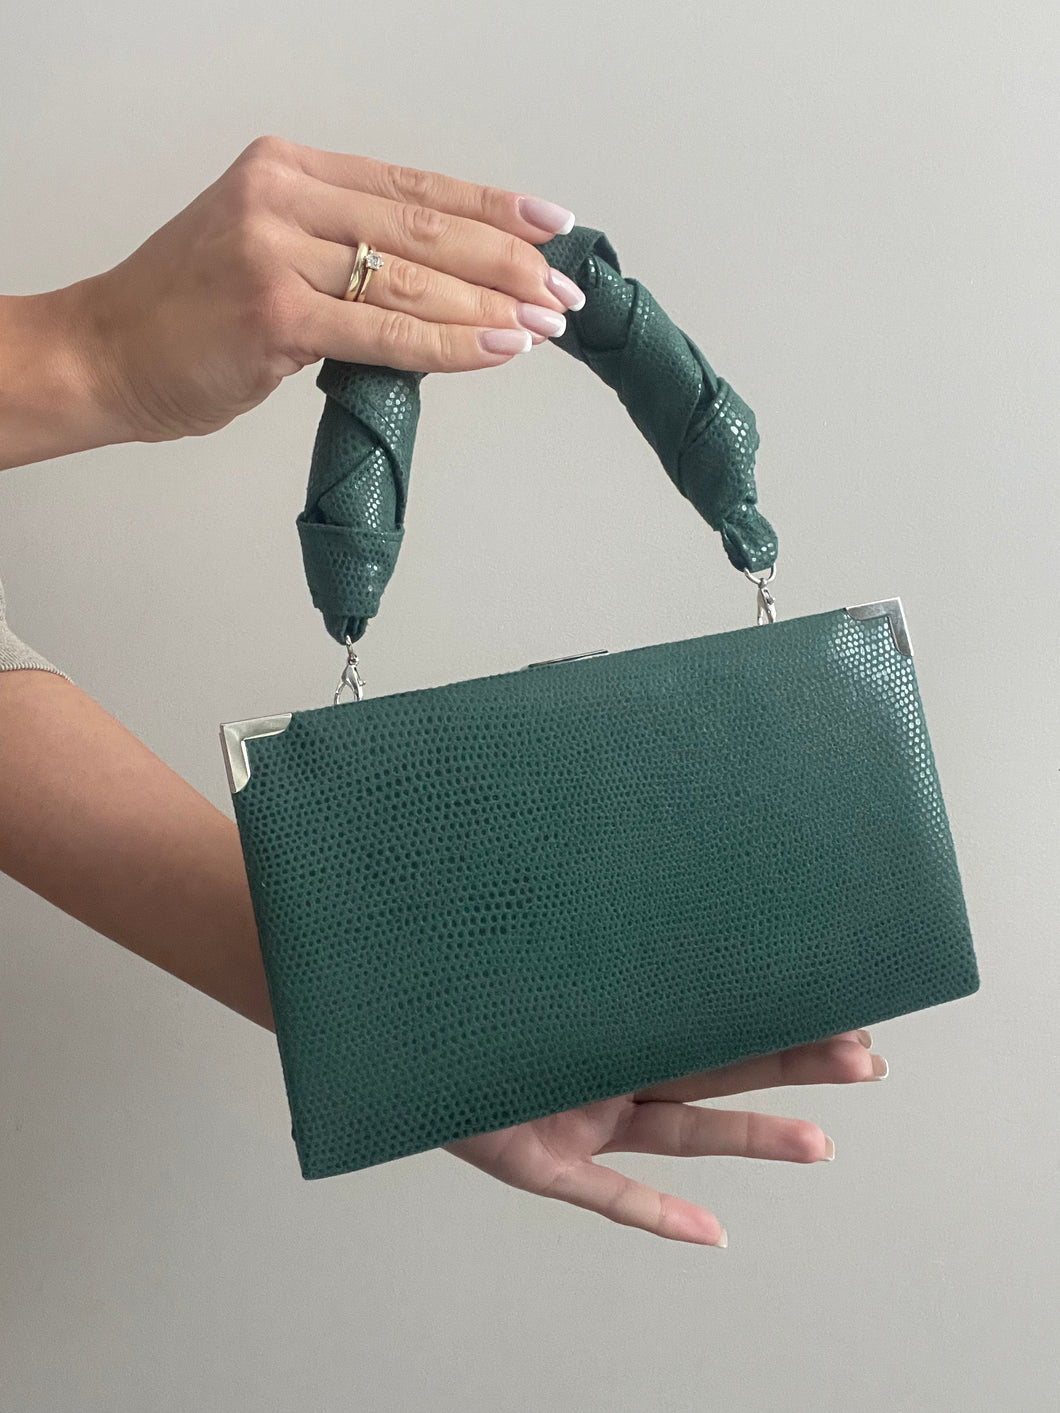 Mini handbag with handle - dark green version